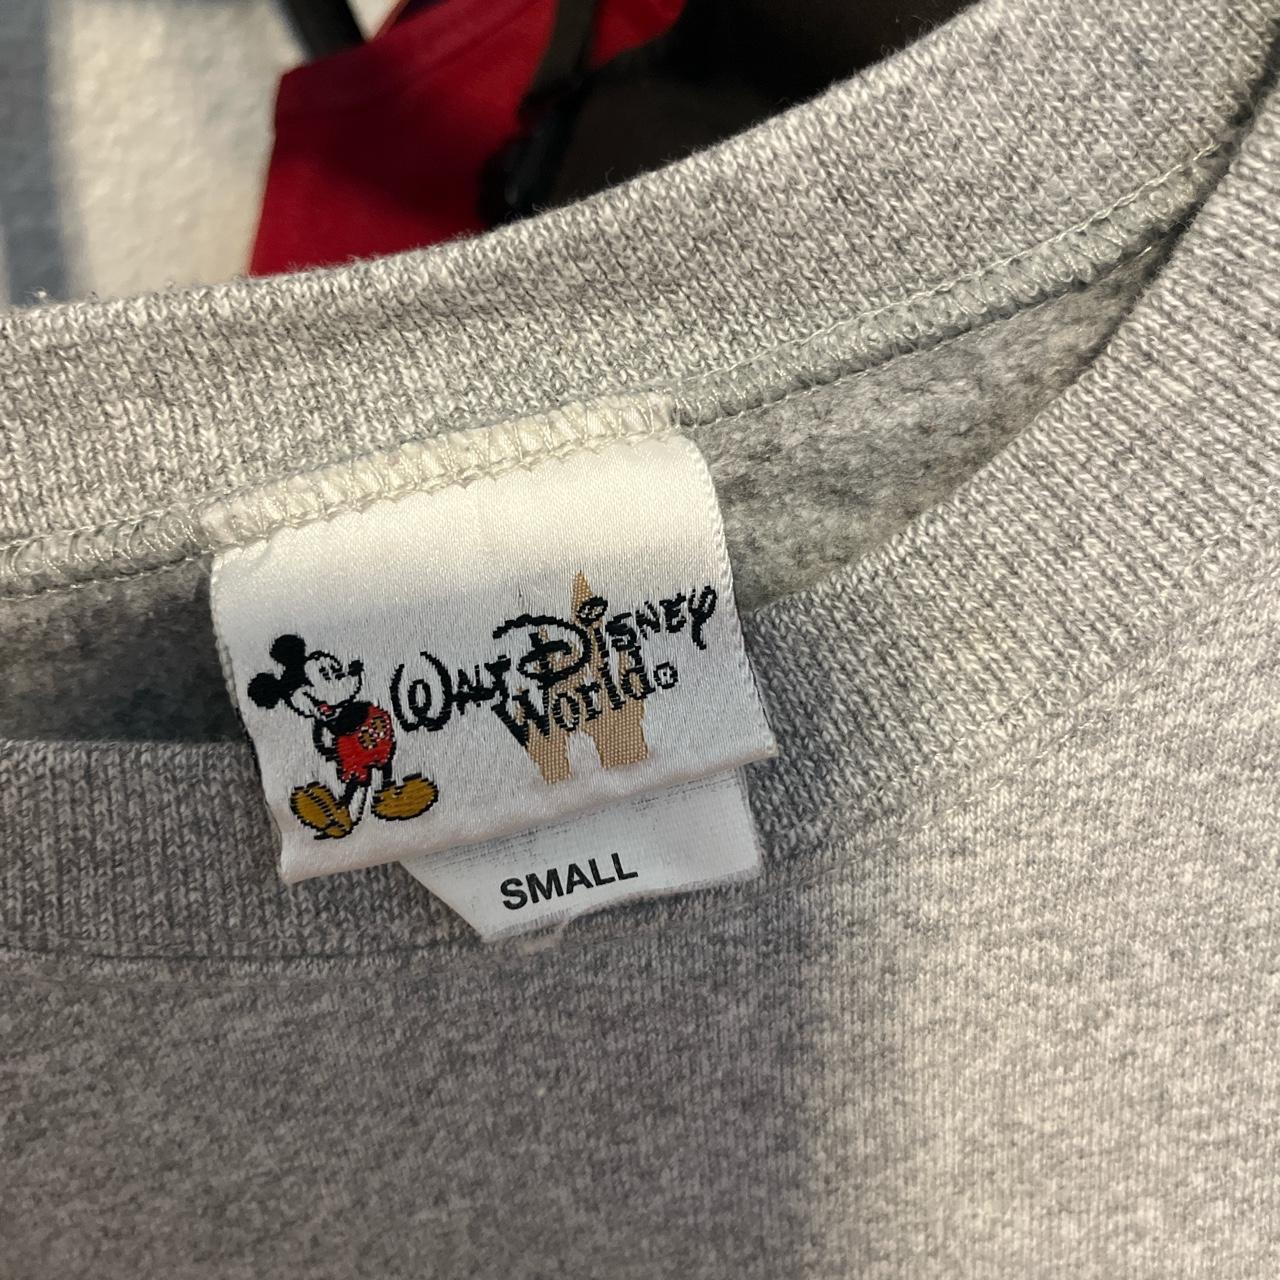 Walt Disney World Golf Mickey Mouse Shot Glass * - Depop